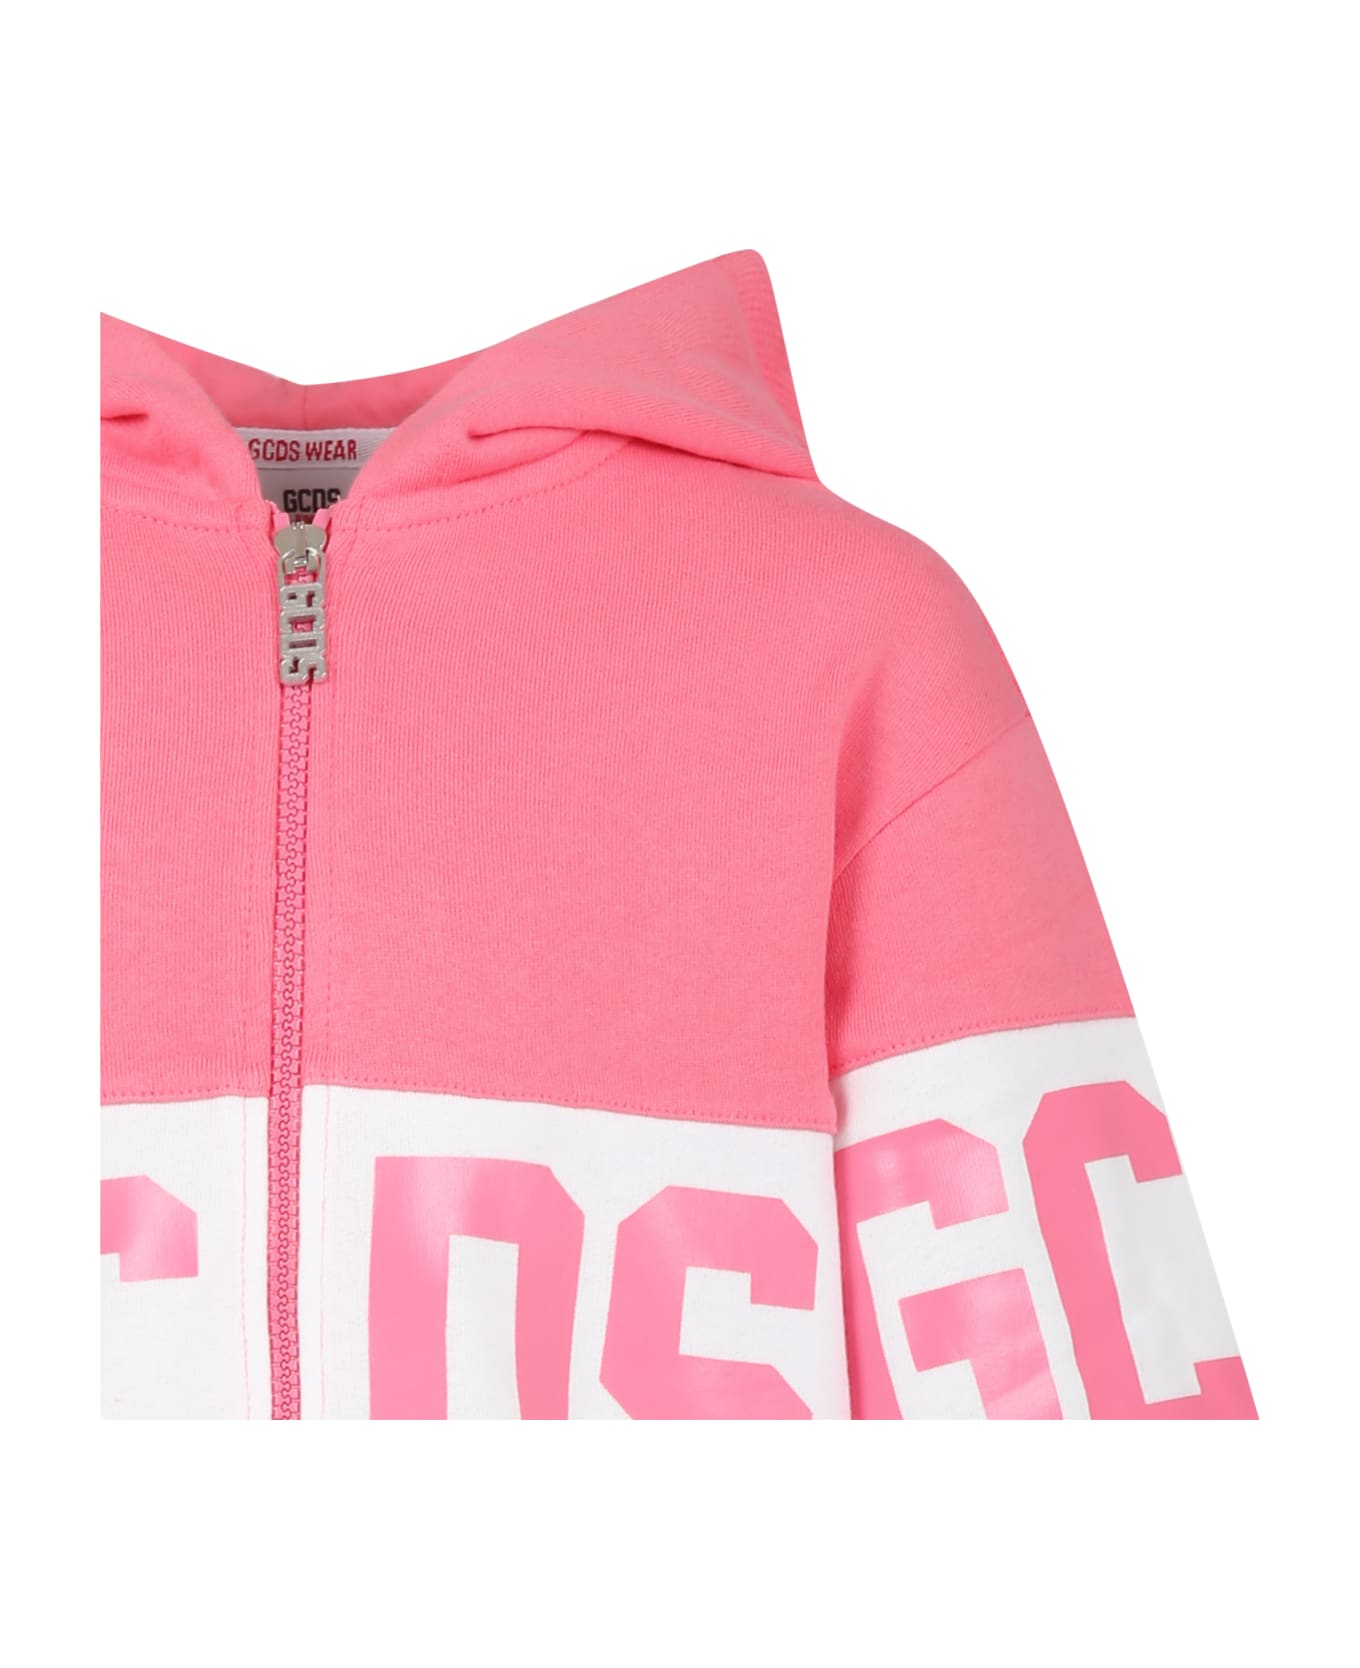 GCDS Mini Pink Sweatshirt For Girl With Logo - Pink